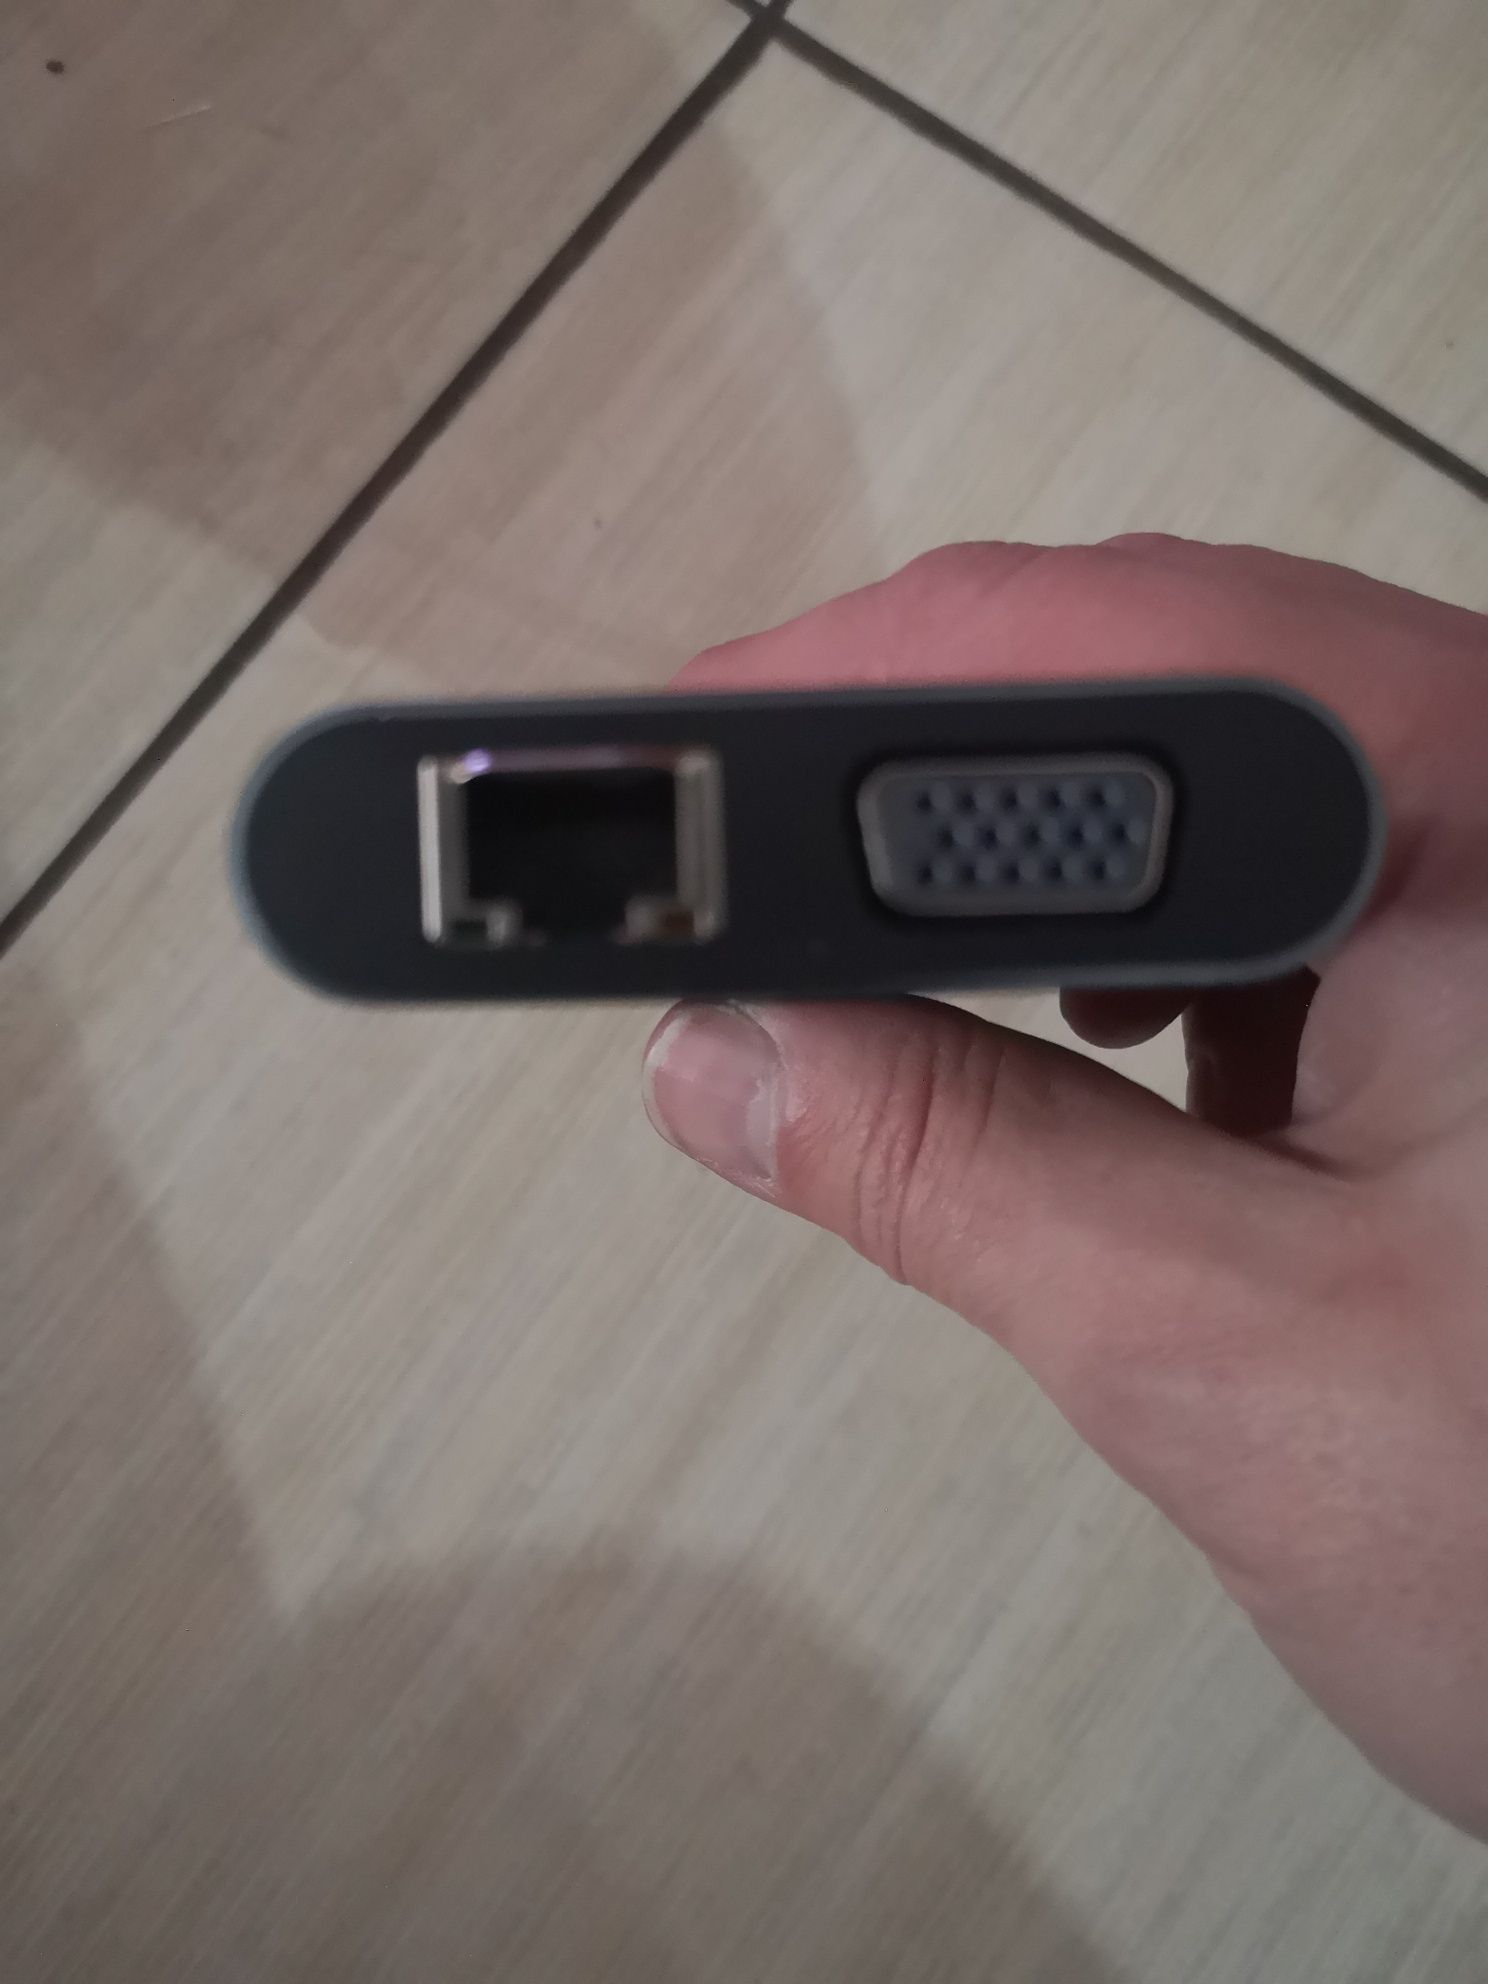 Hub USB C. 11 w 1